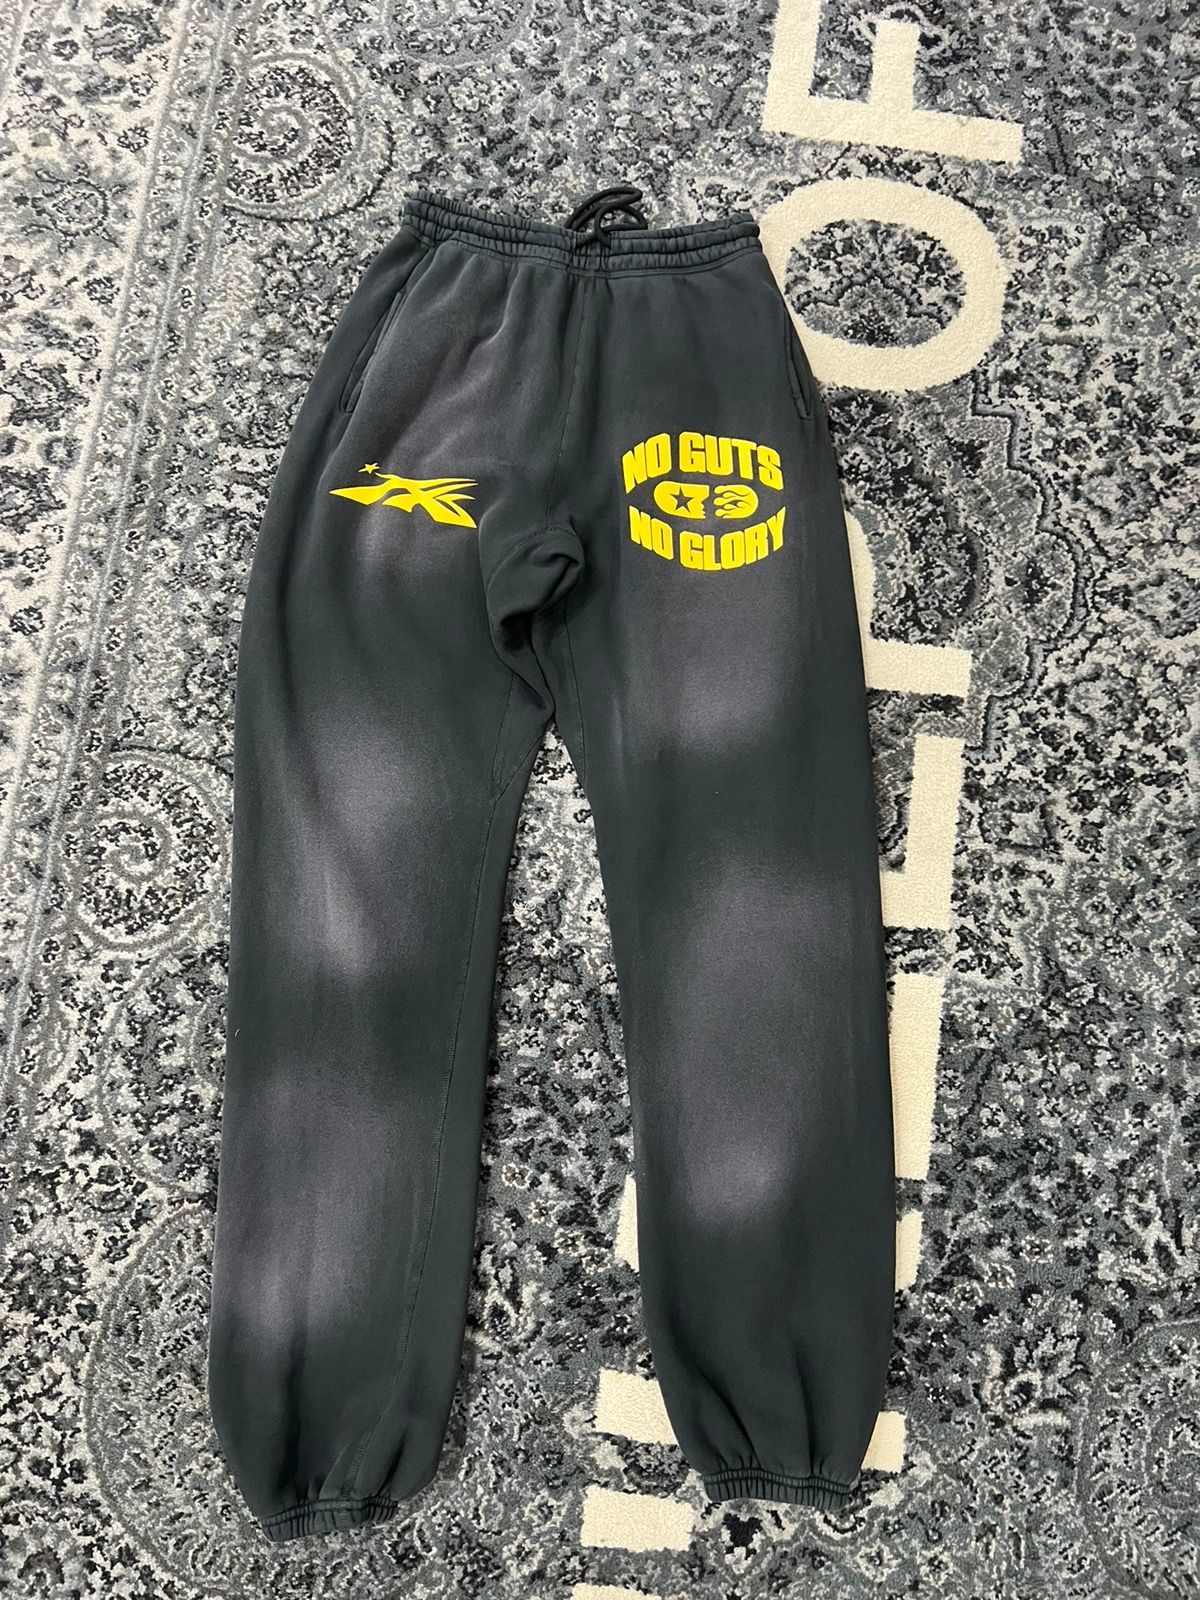 Pre-owned Hellstar “no Guts No Glory” Sweatpants - Size Medium (black)